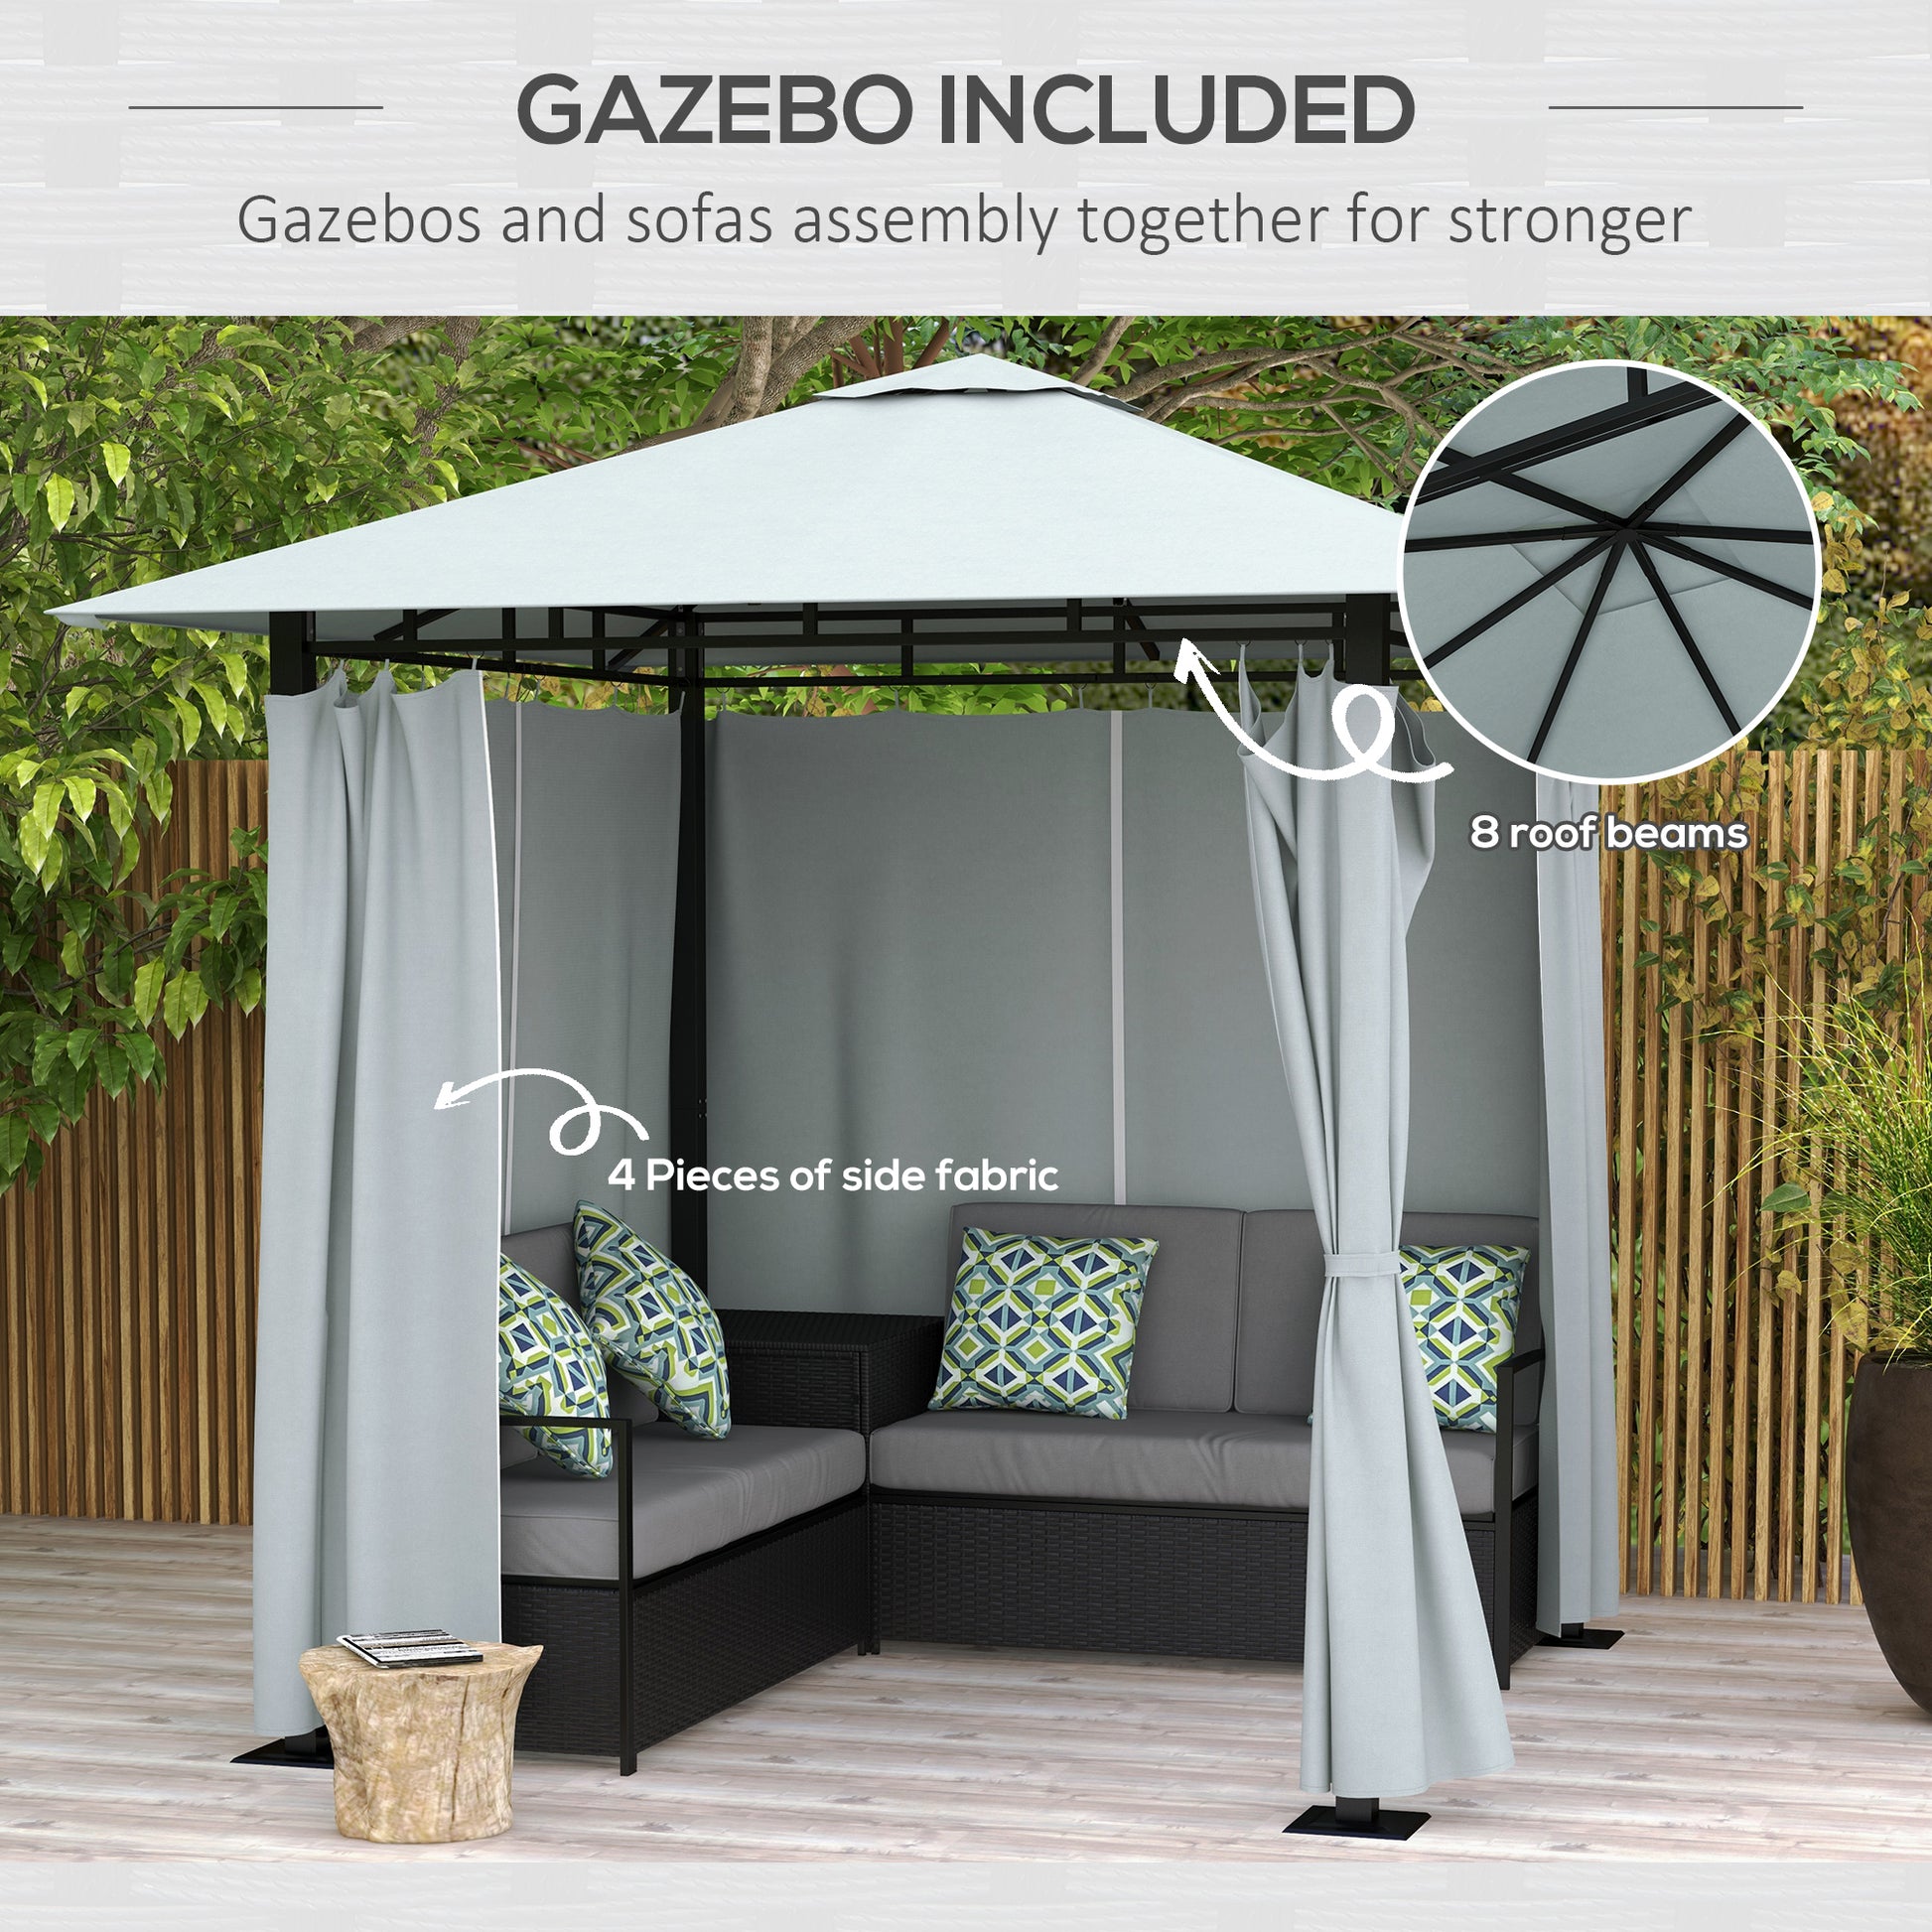 Patio Furniture Set with Gazebo, Outdoor PE Rattan Wicker Conversation Sofa with Storage Corner Table, Cushion, for Backyard, Porch, Poolside, Balcony, Grey - Gallery Canada